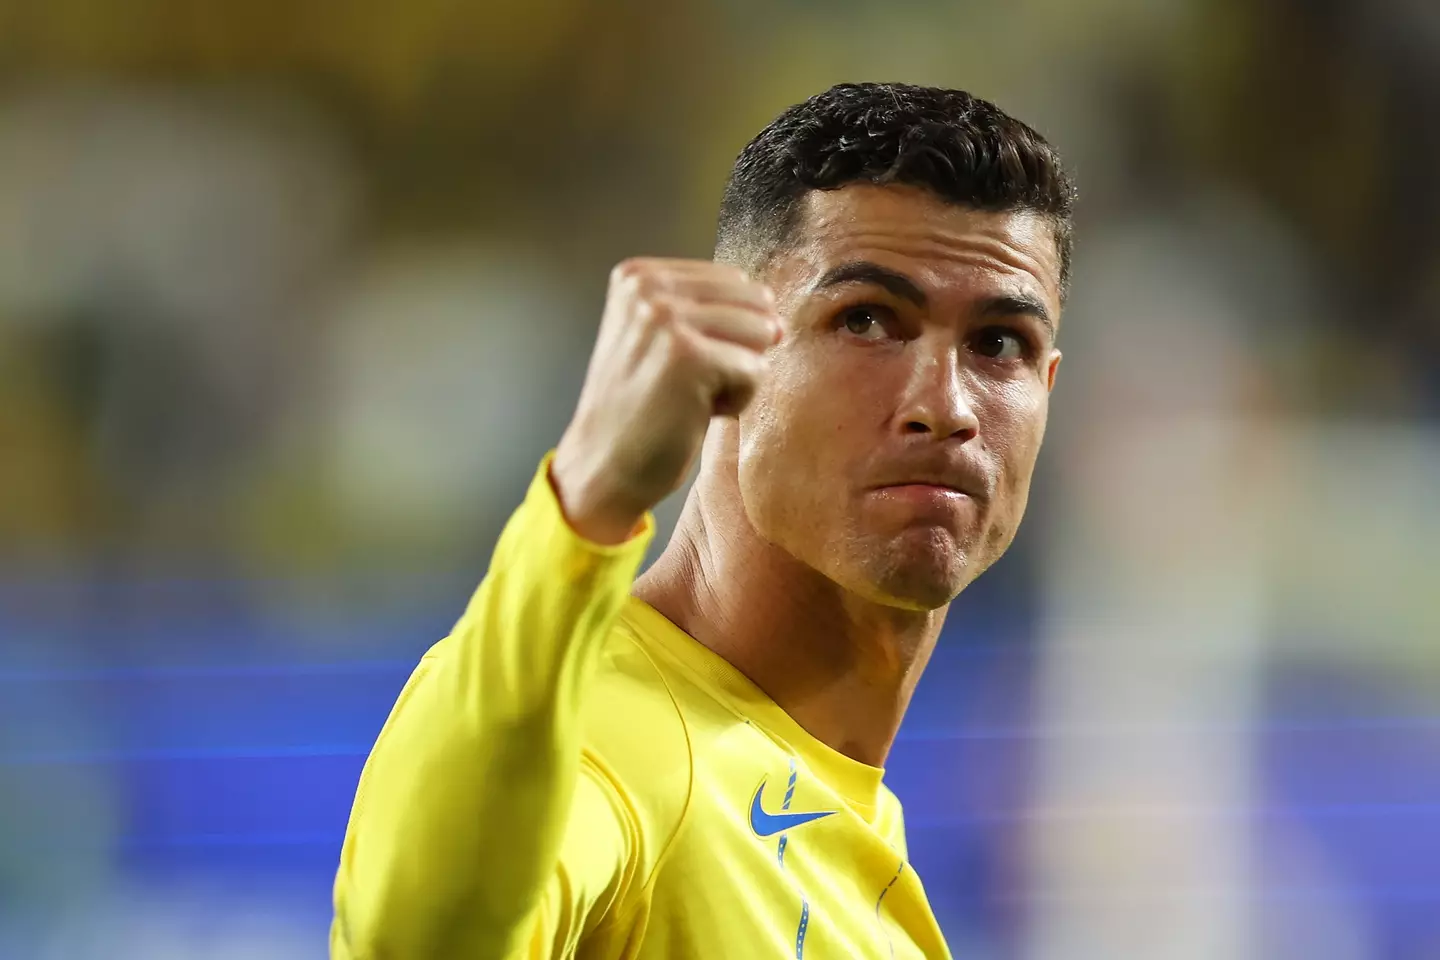 Christiano Ronaldo went viral earlier this week after fans noticed him wearing black nail polish.